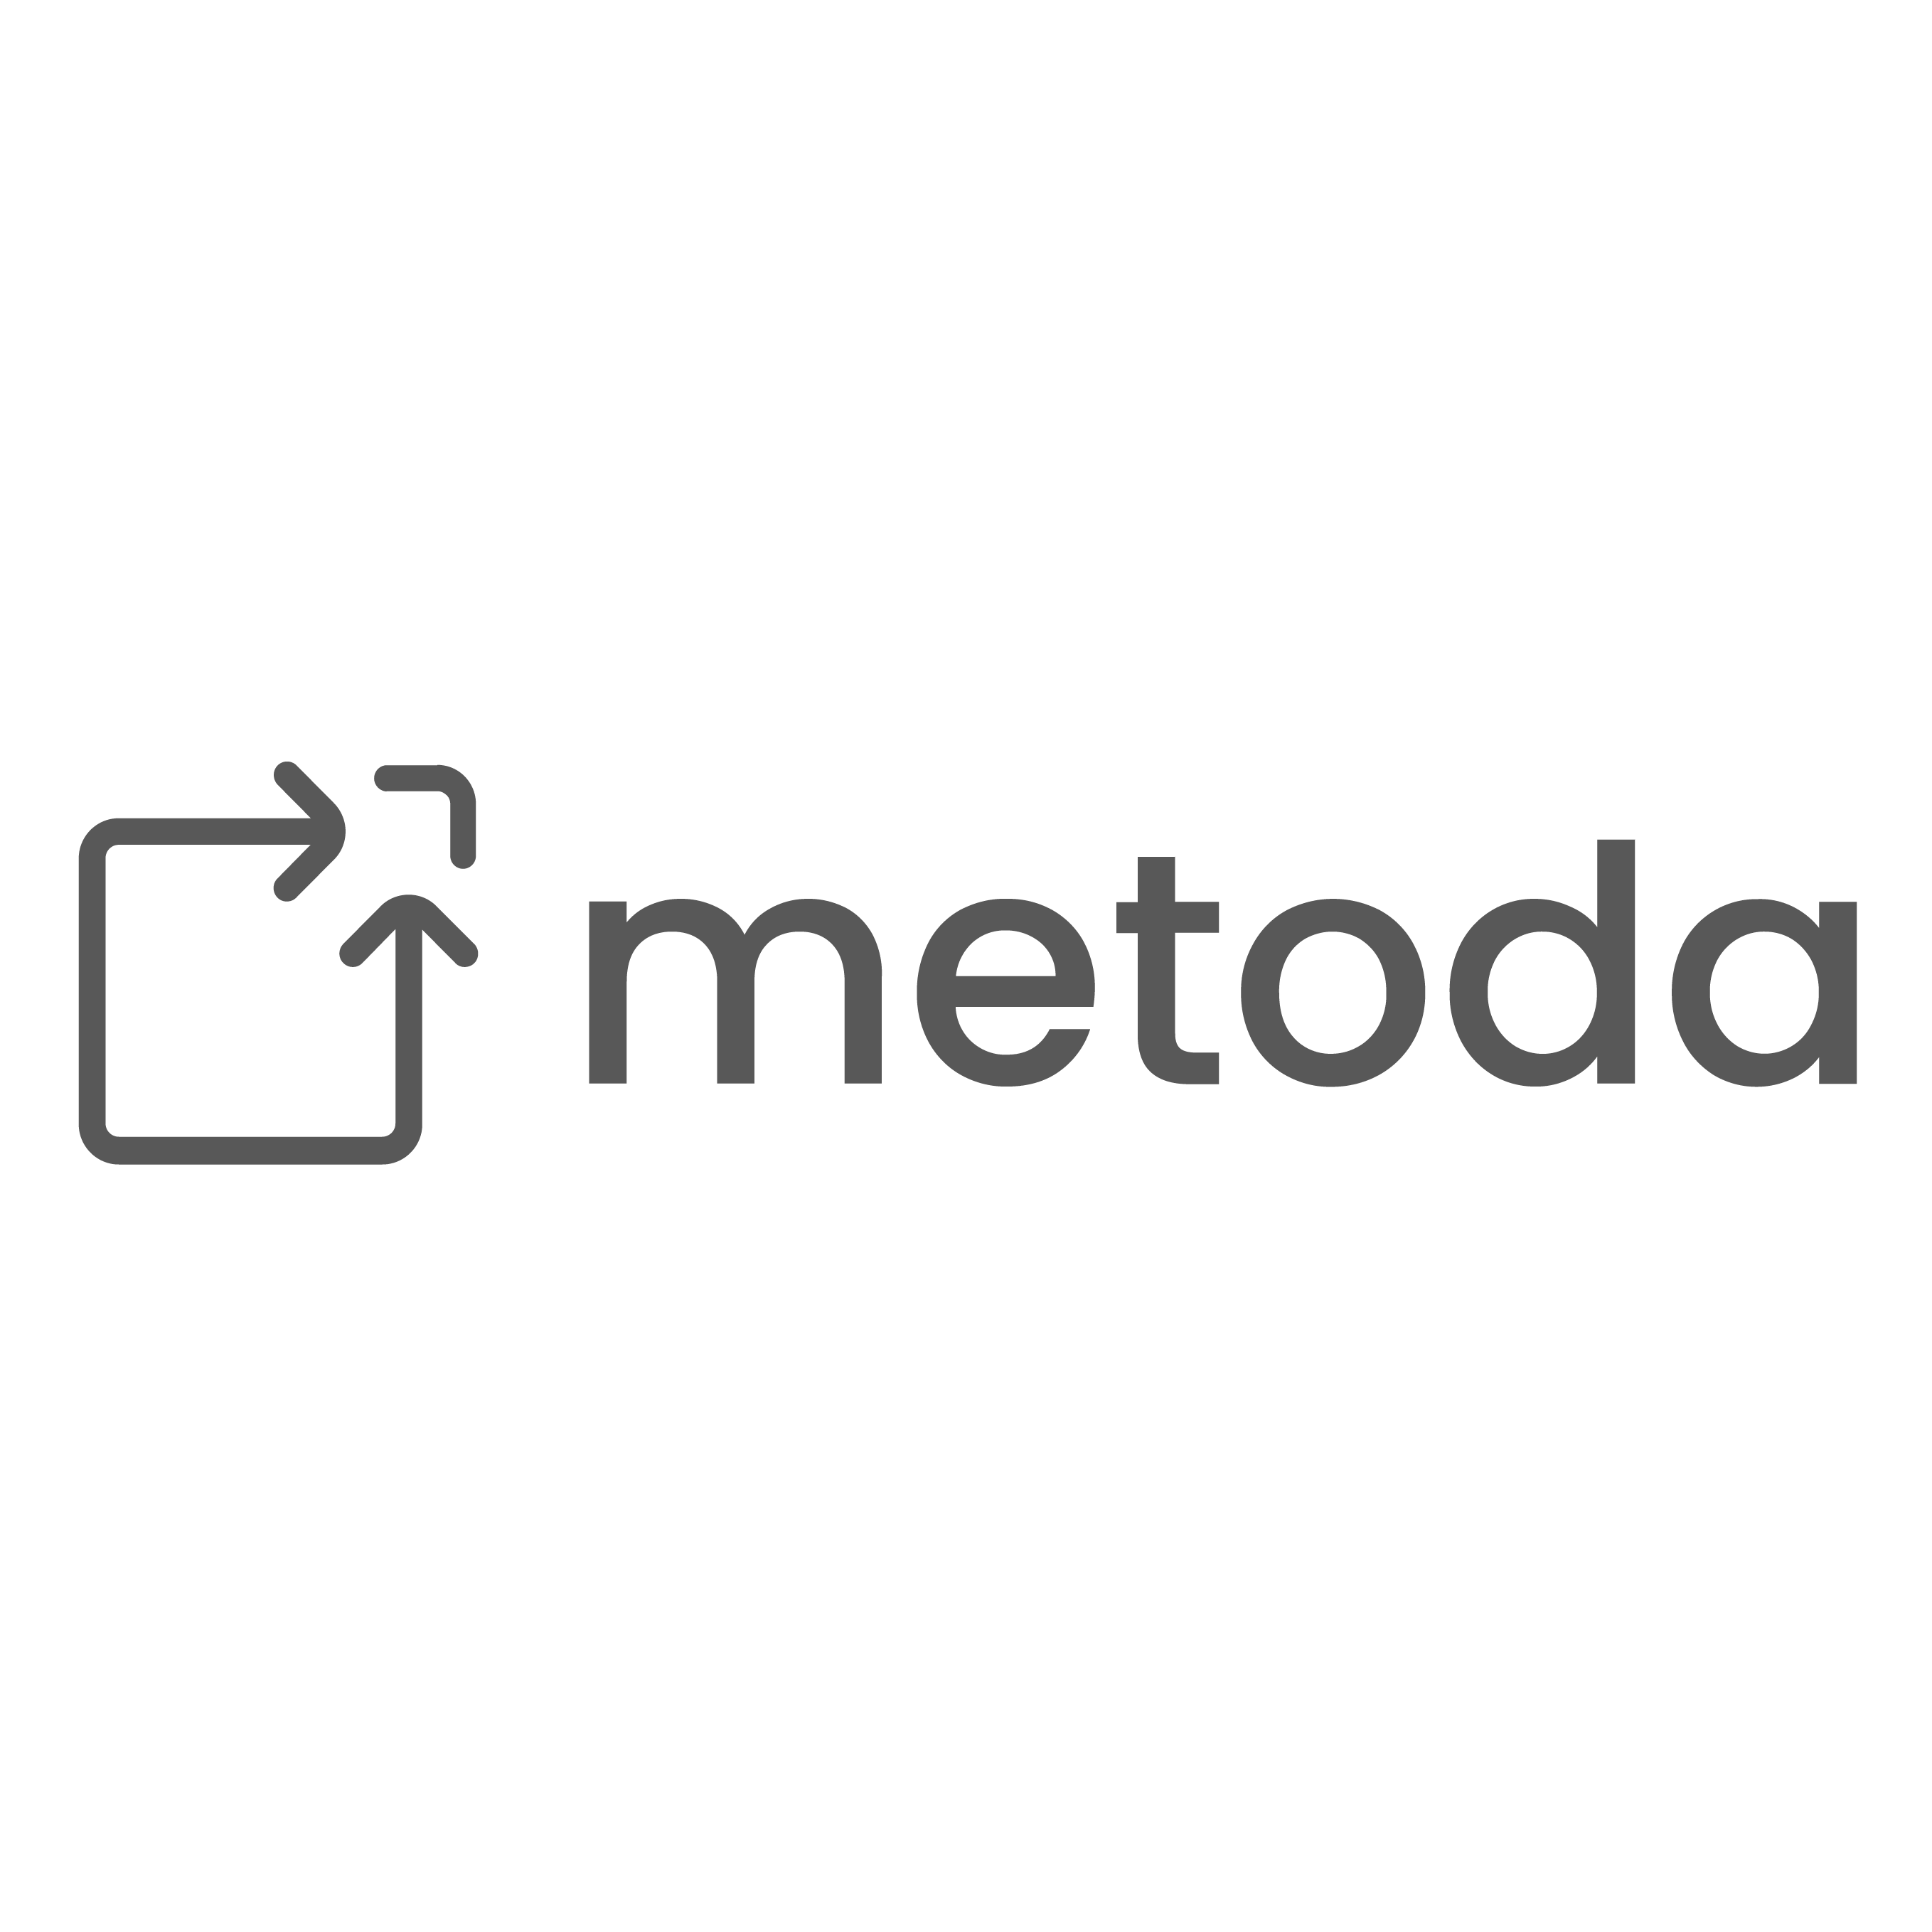 metoda_logo